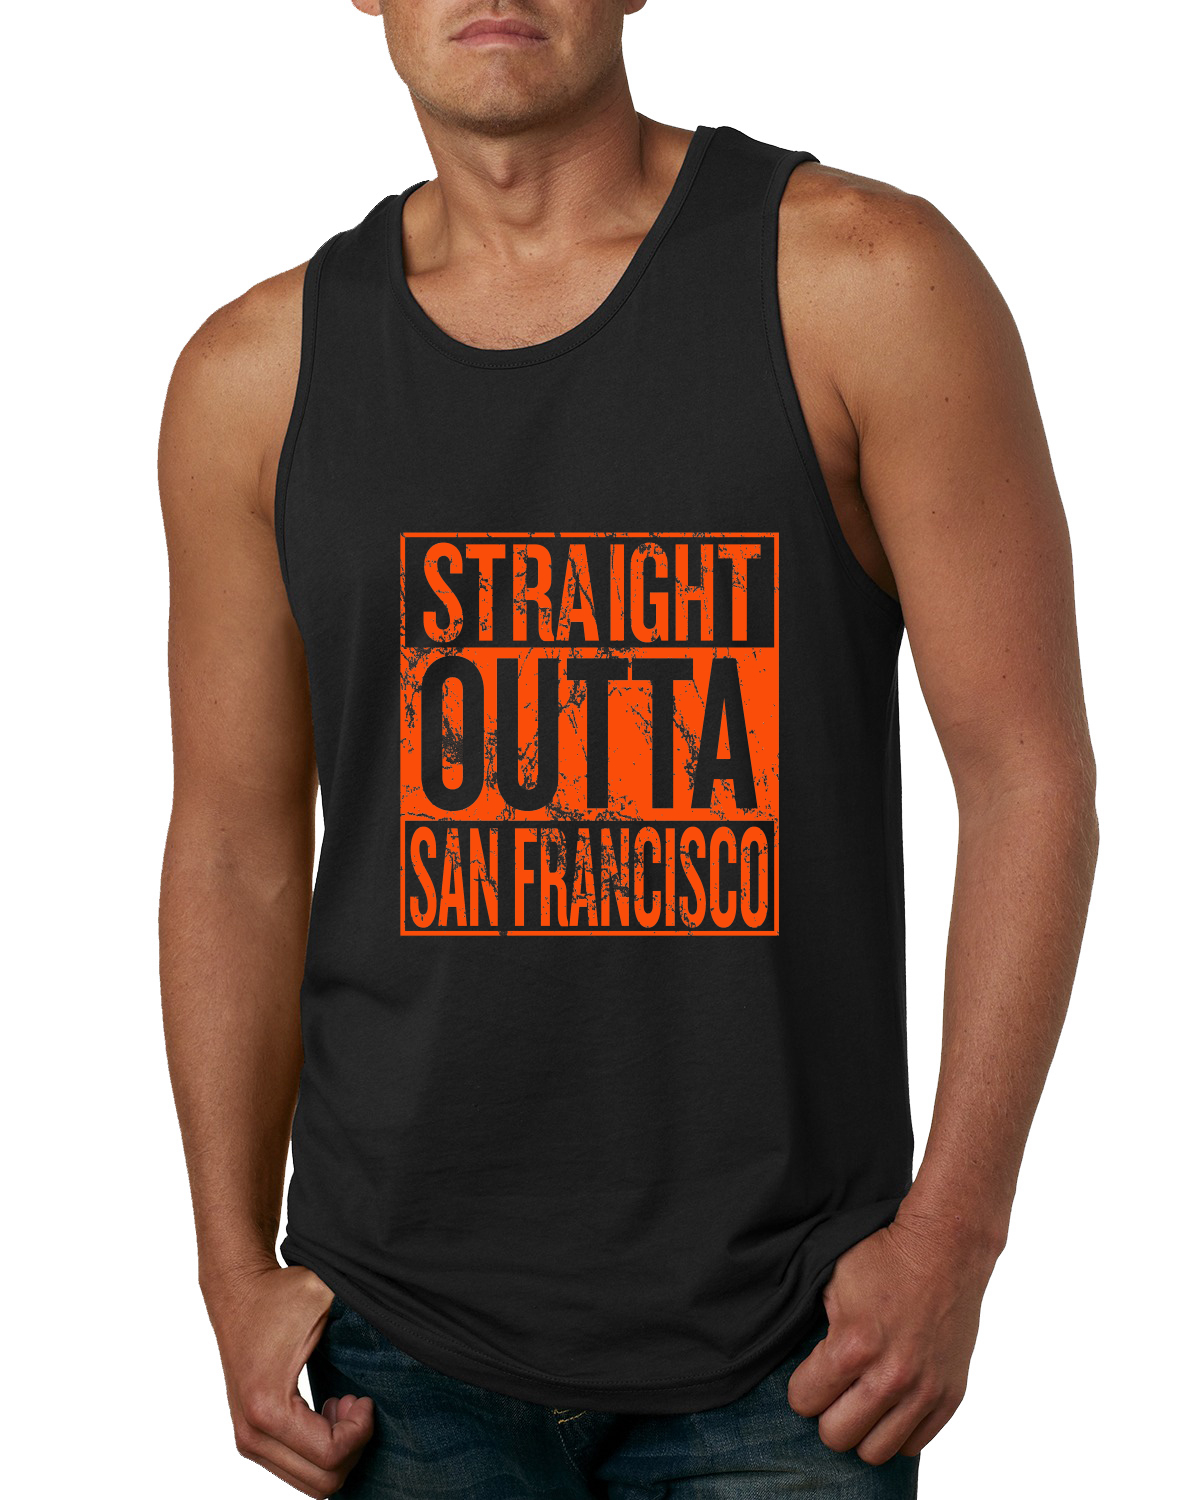 Straight Outta San Francisco SF Fan | Fantasy Baseball Fans | Mens Sports Graphic Tank Top, Black, Small - image 1 of 4